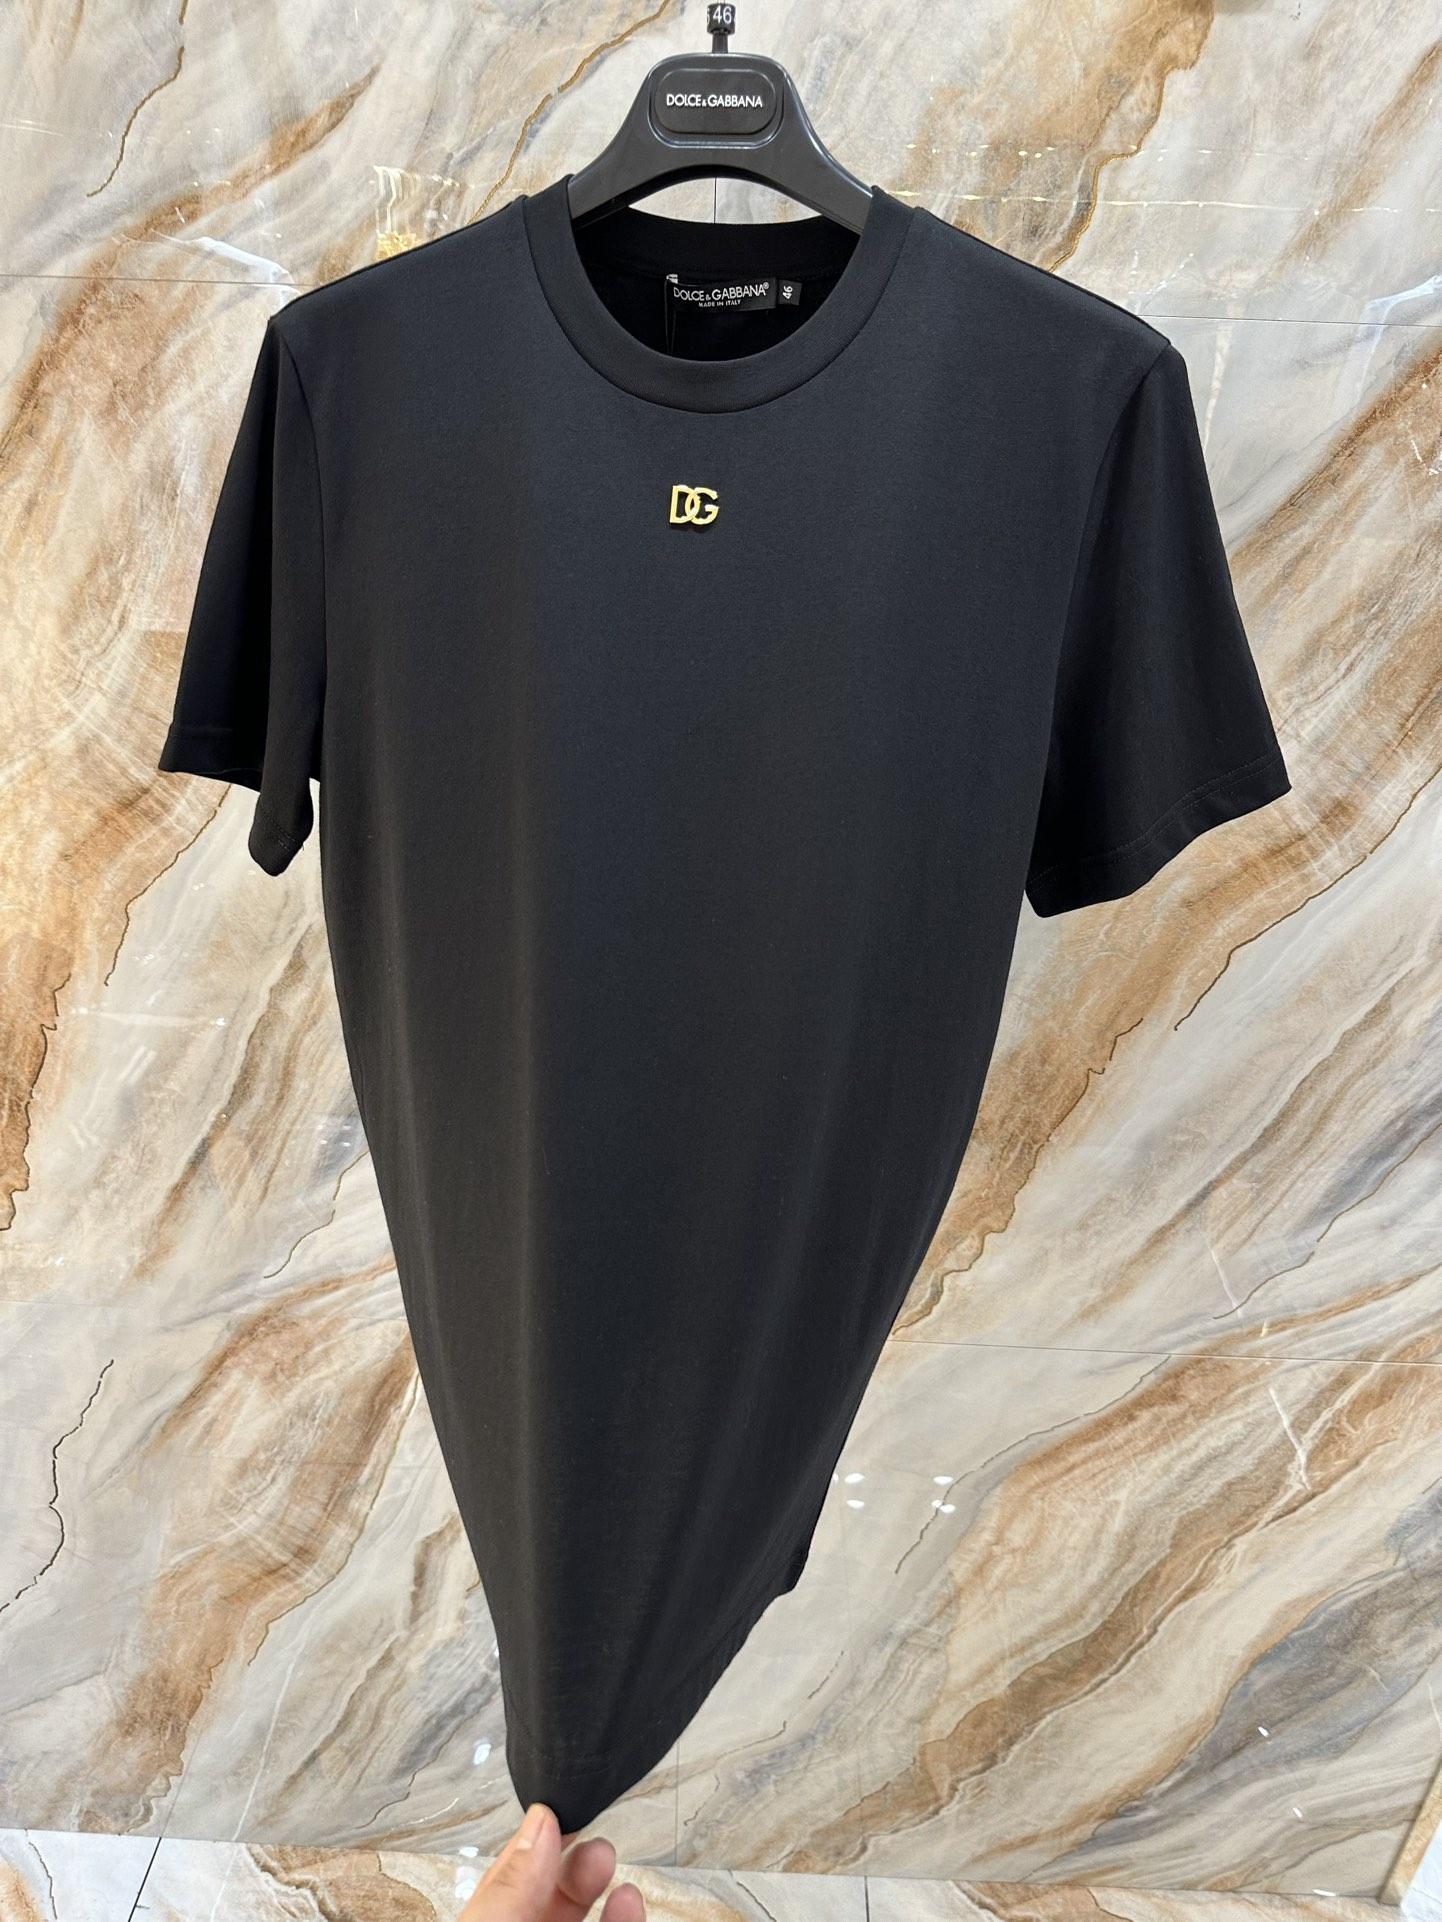 cotton-t-shirt-with-metallic-dg-logo-7173_16845017963-1000